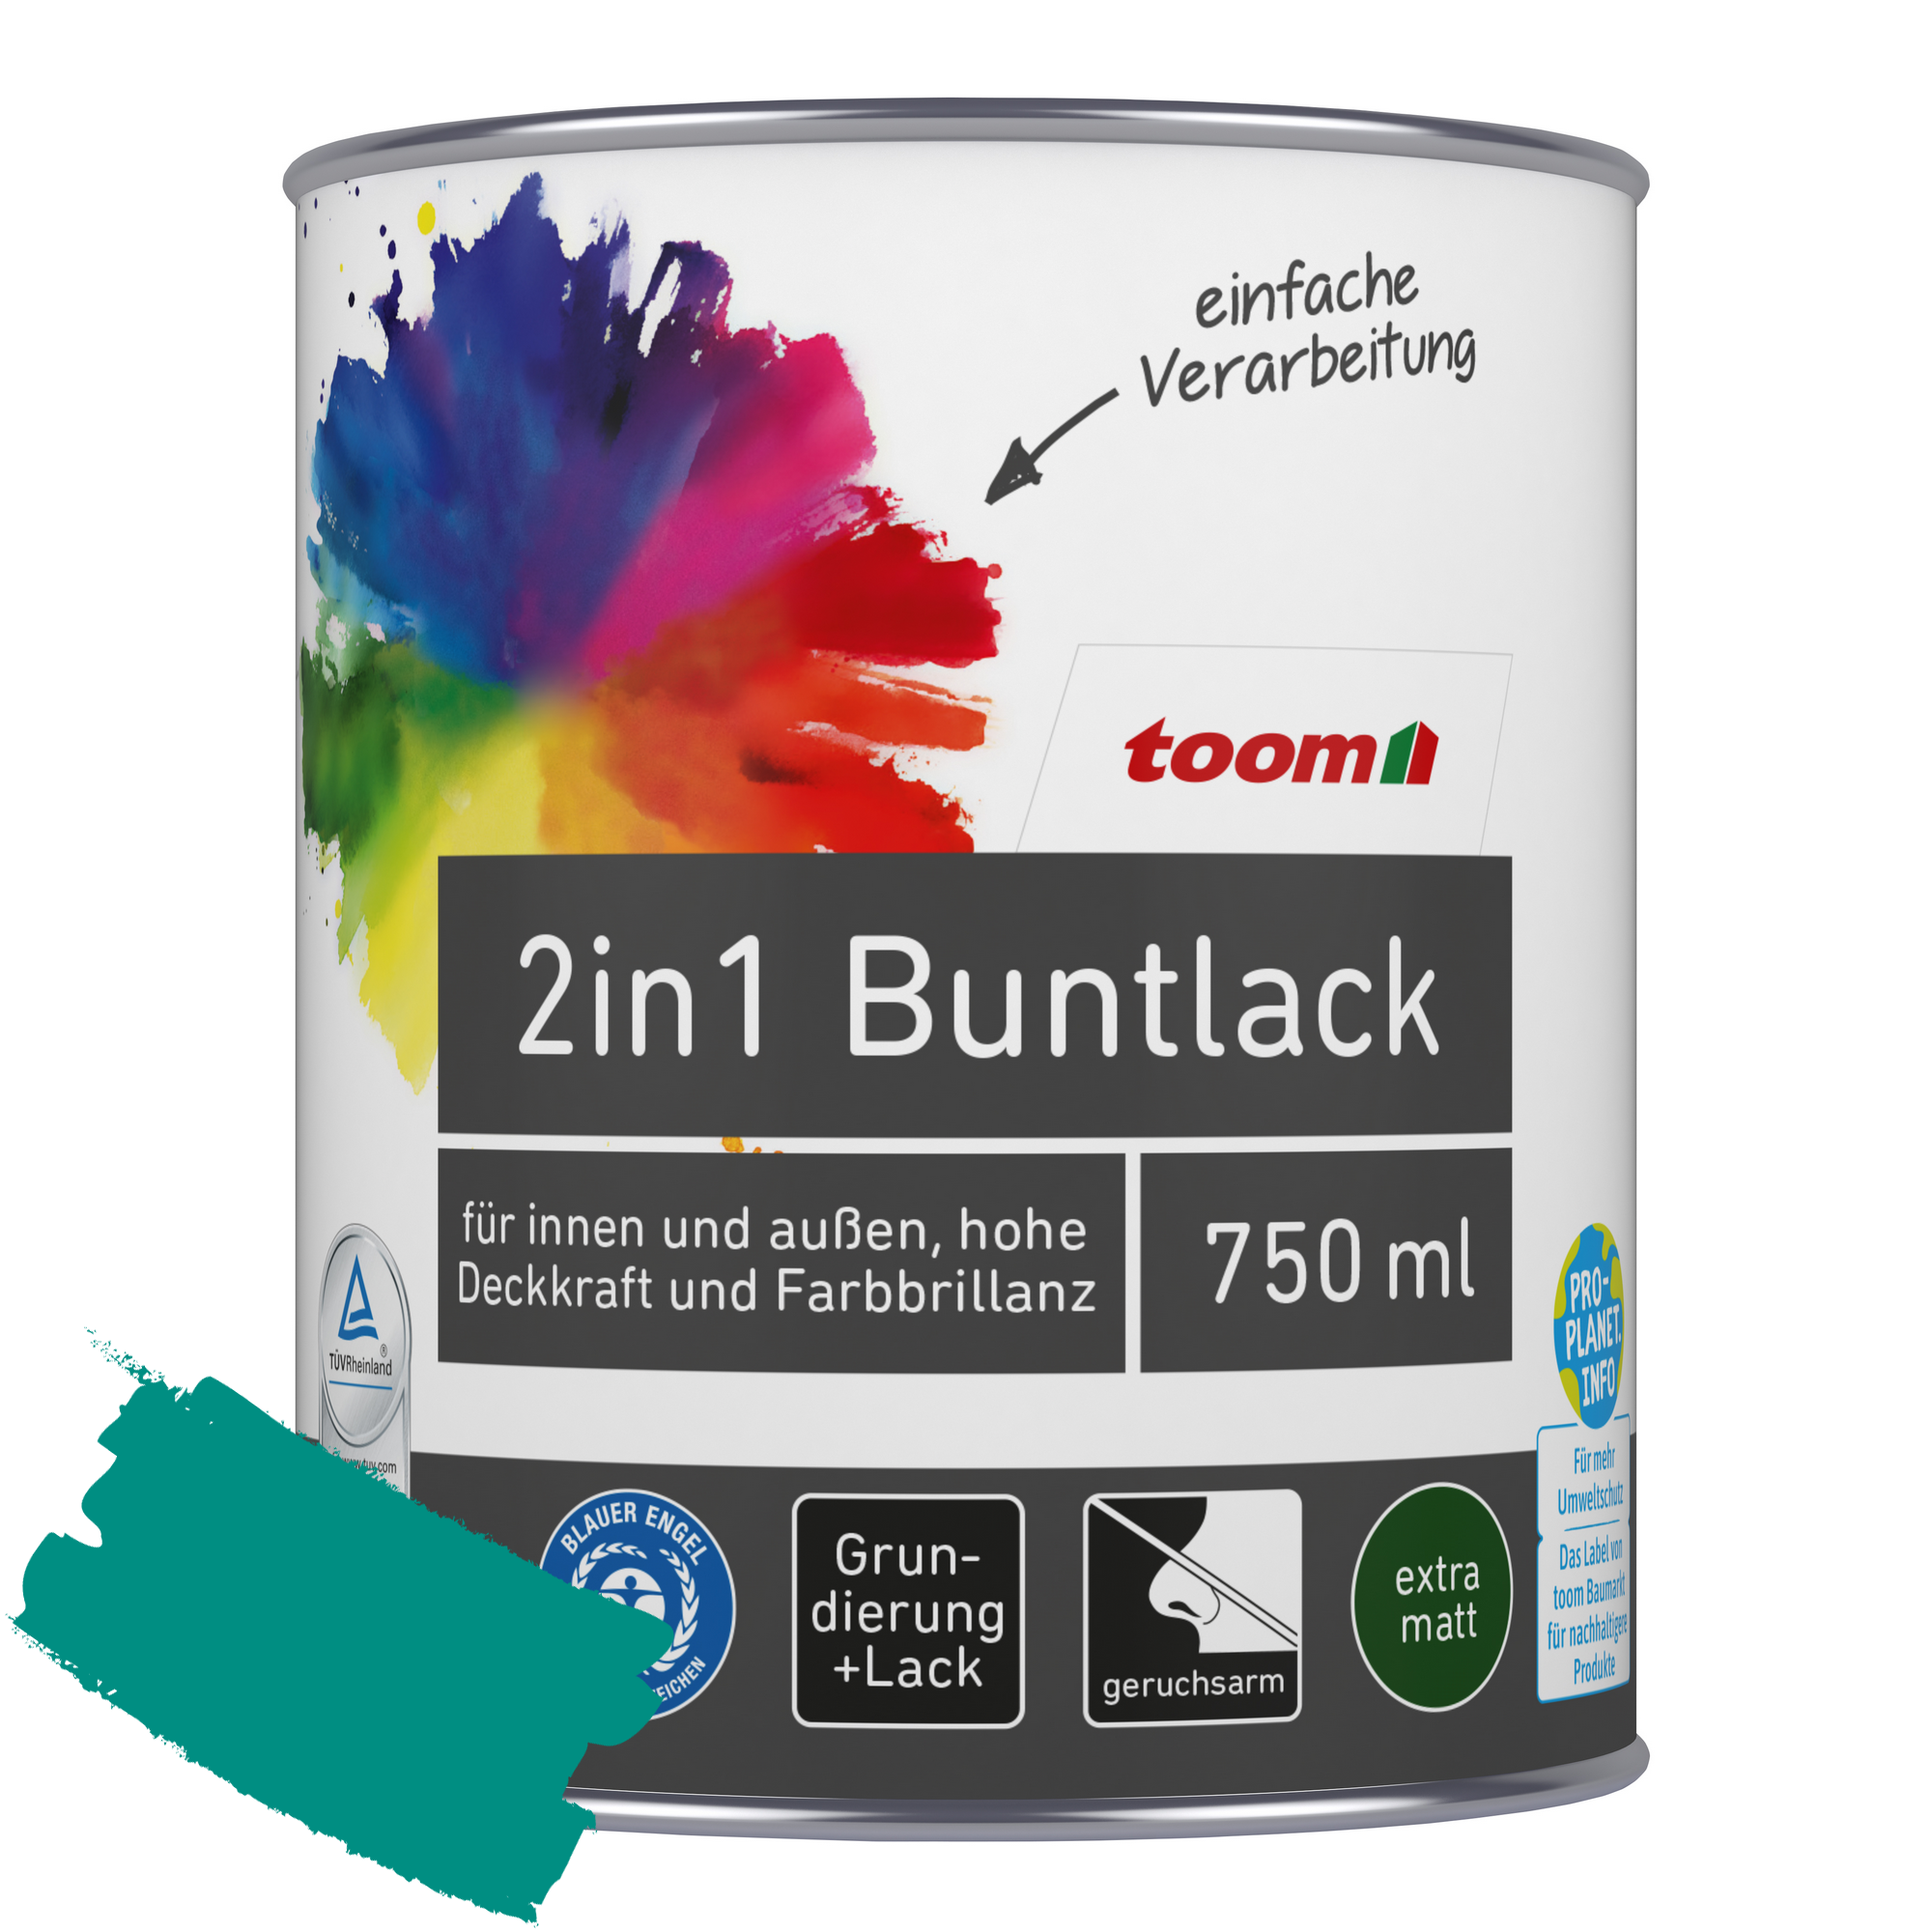 2in1 Buntlack 'Südseetraum' petrolfarben matt 750 ml + product picture